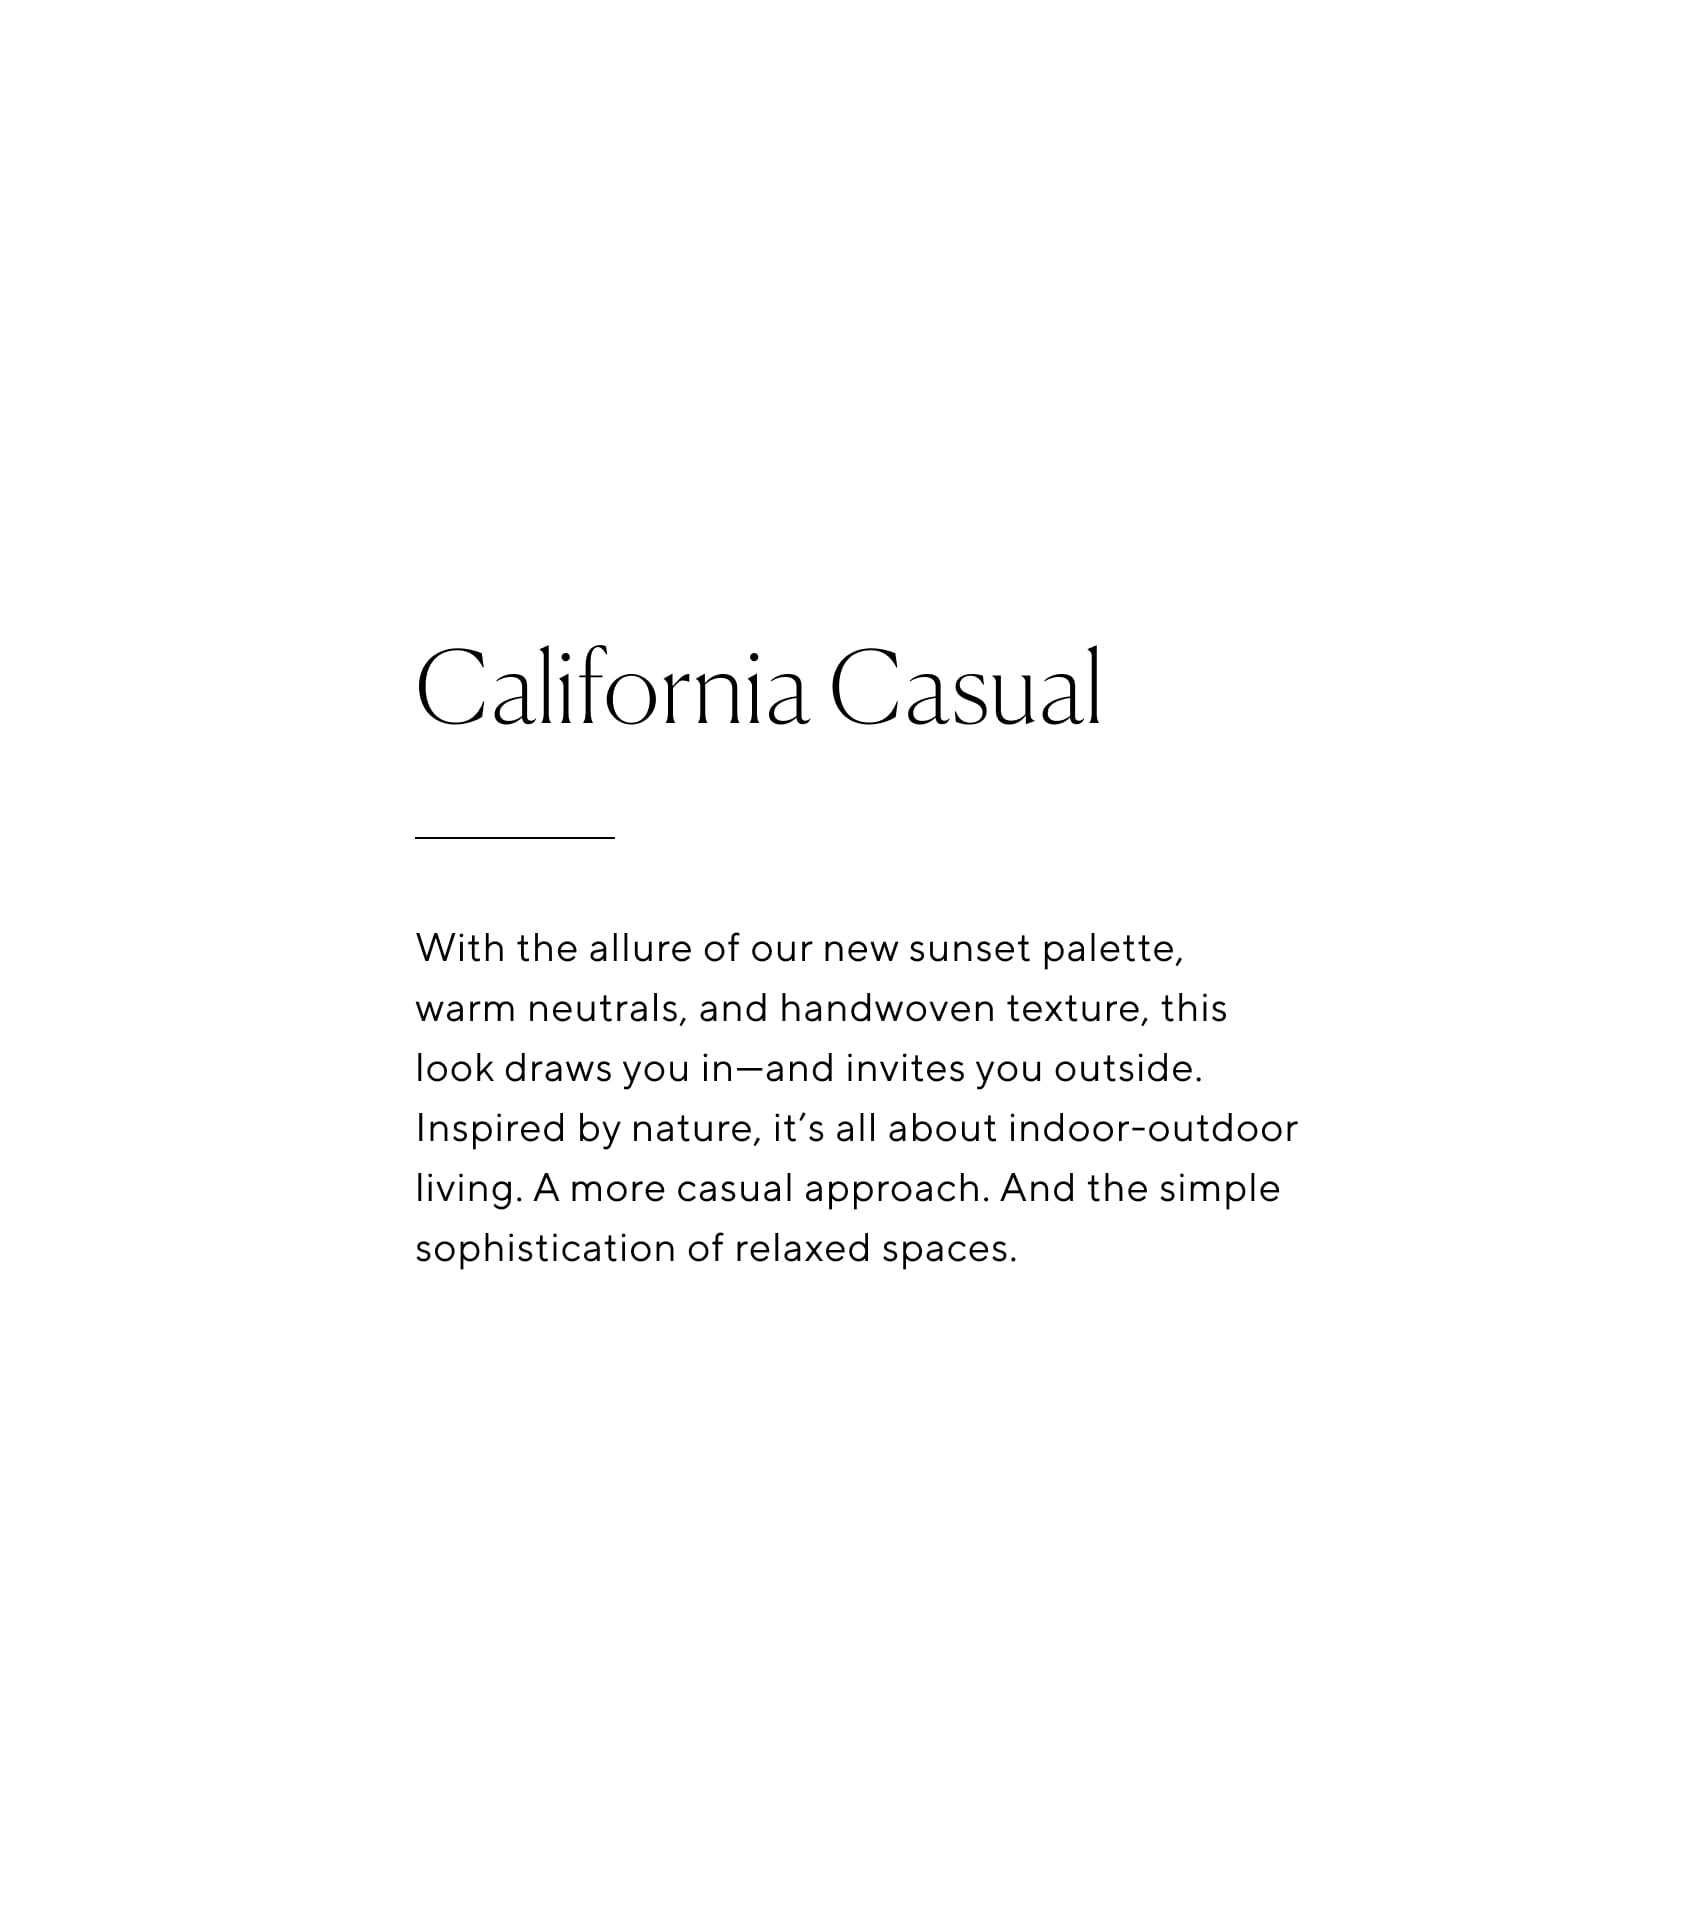 California Casual